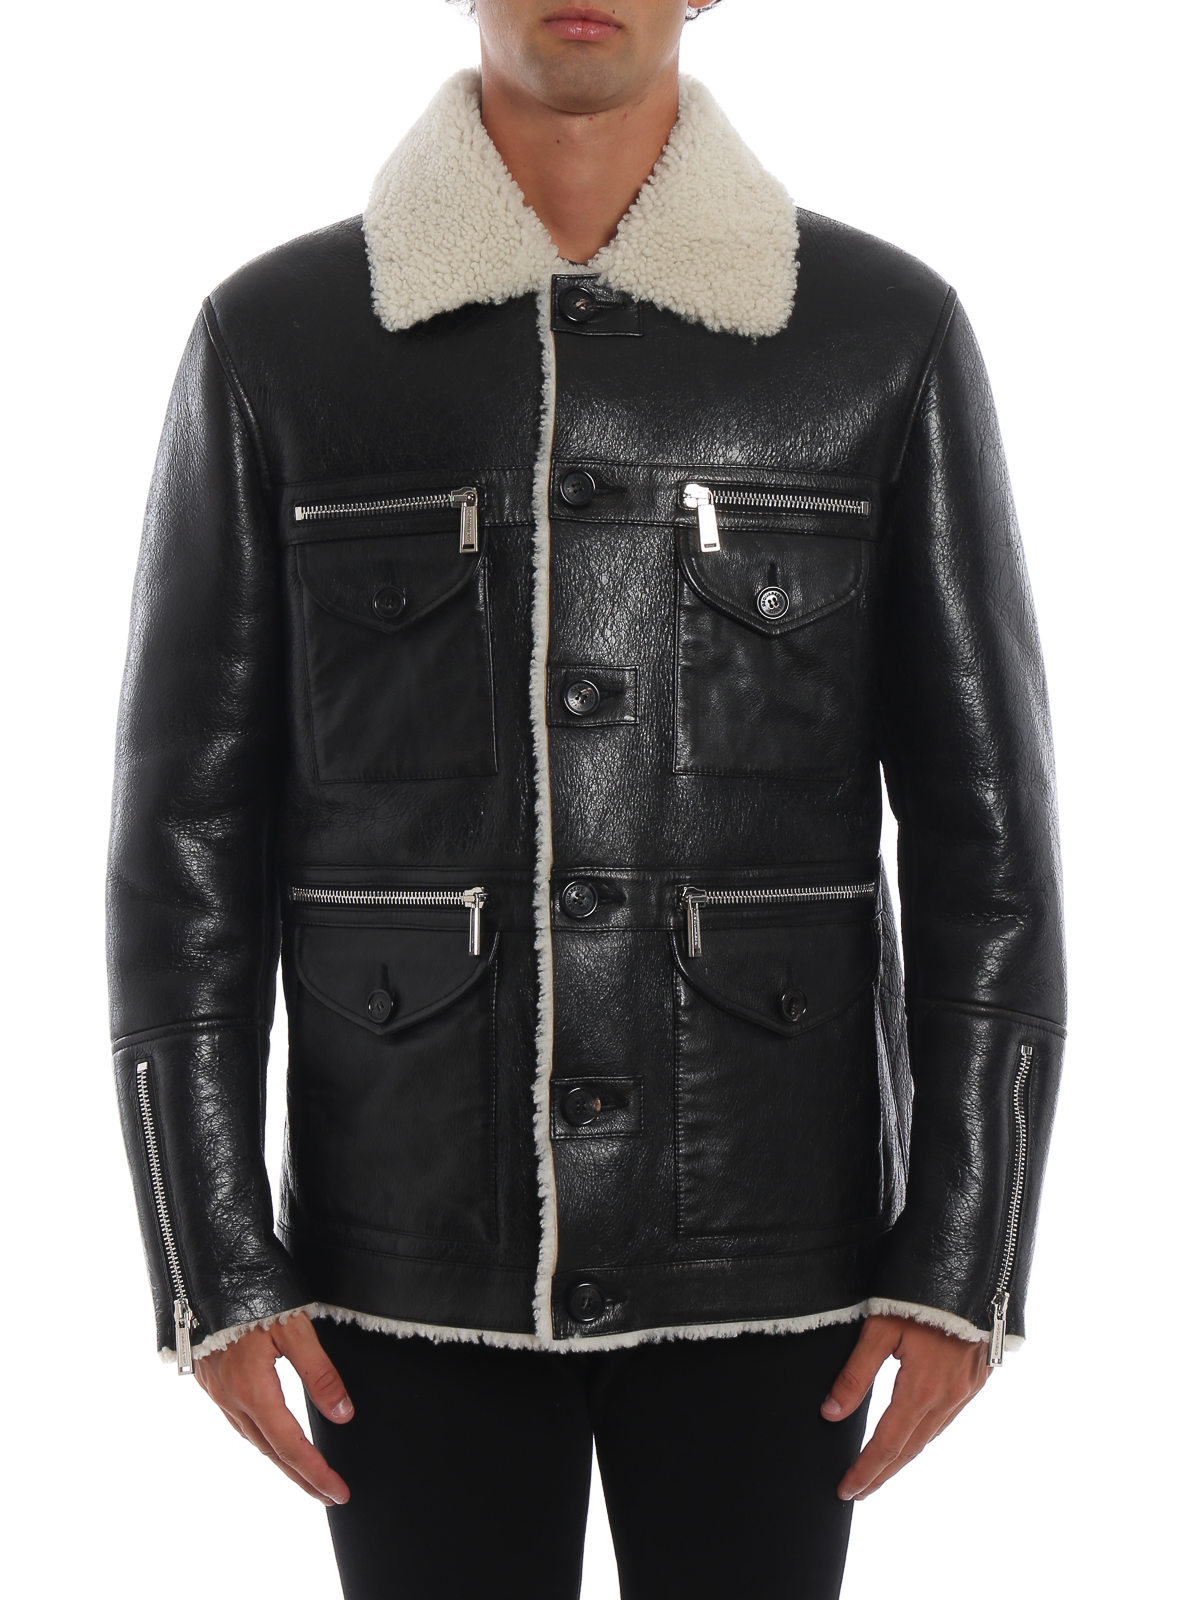 sheepskin lined jacket